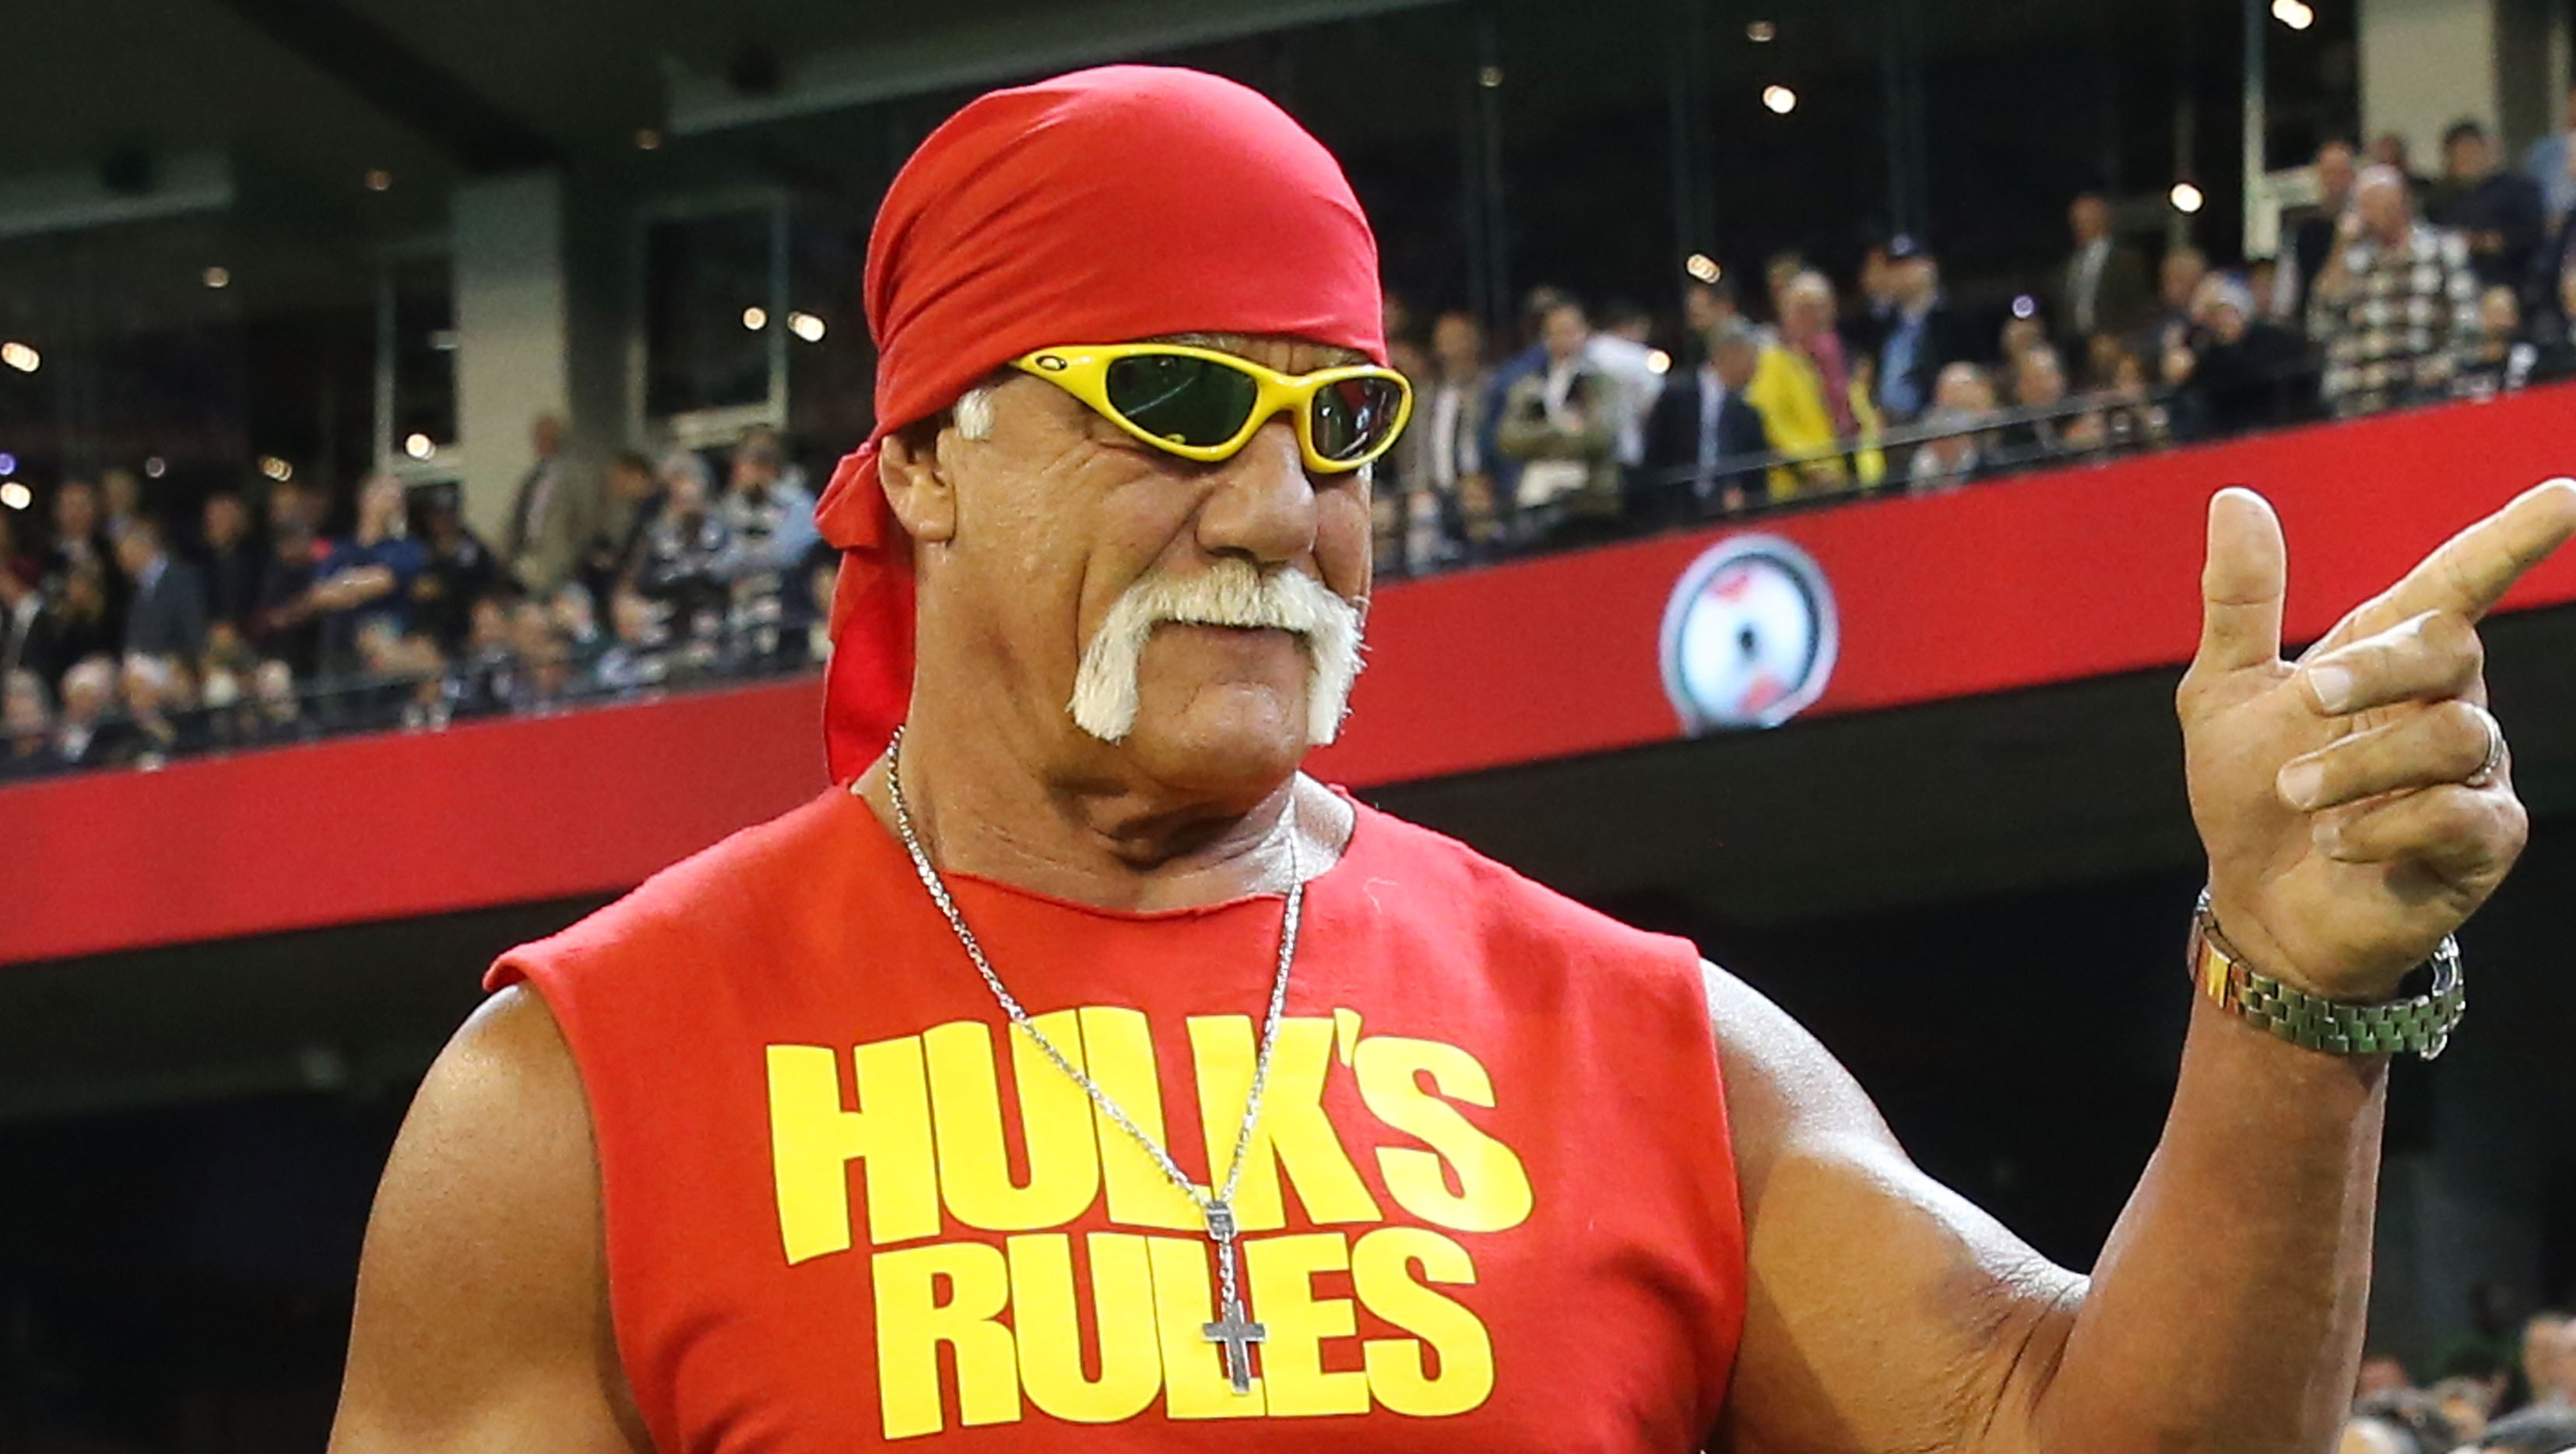 Hulk Hogan terminated by WWE following report of racist rant